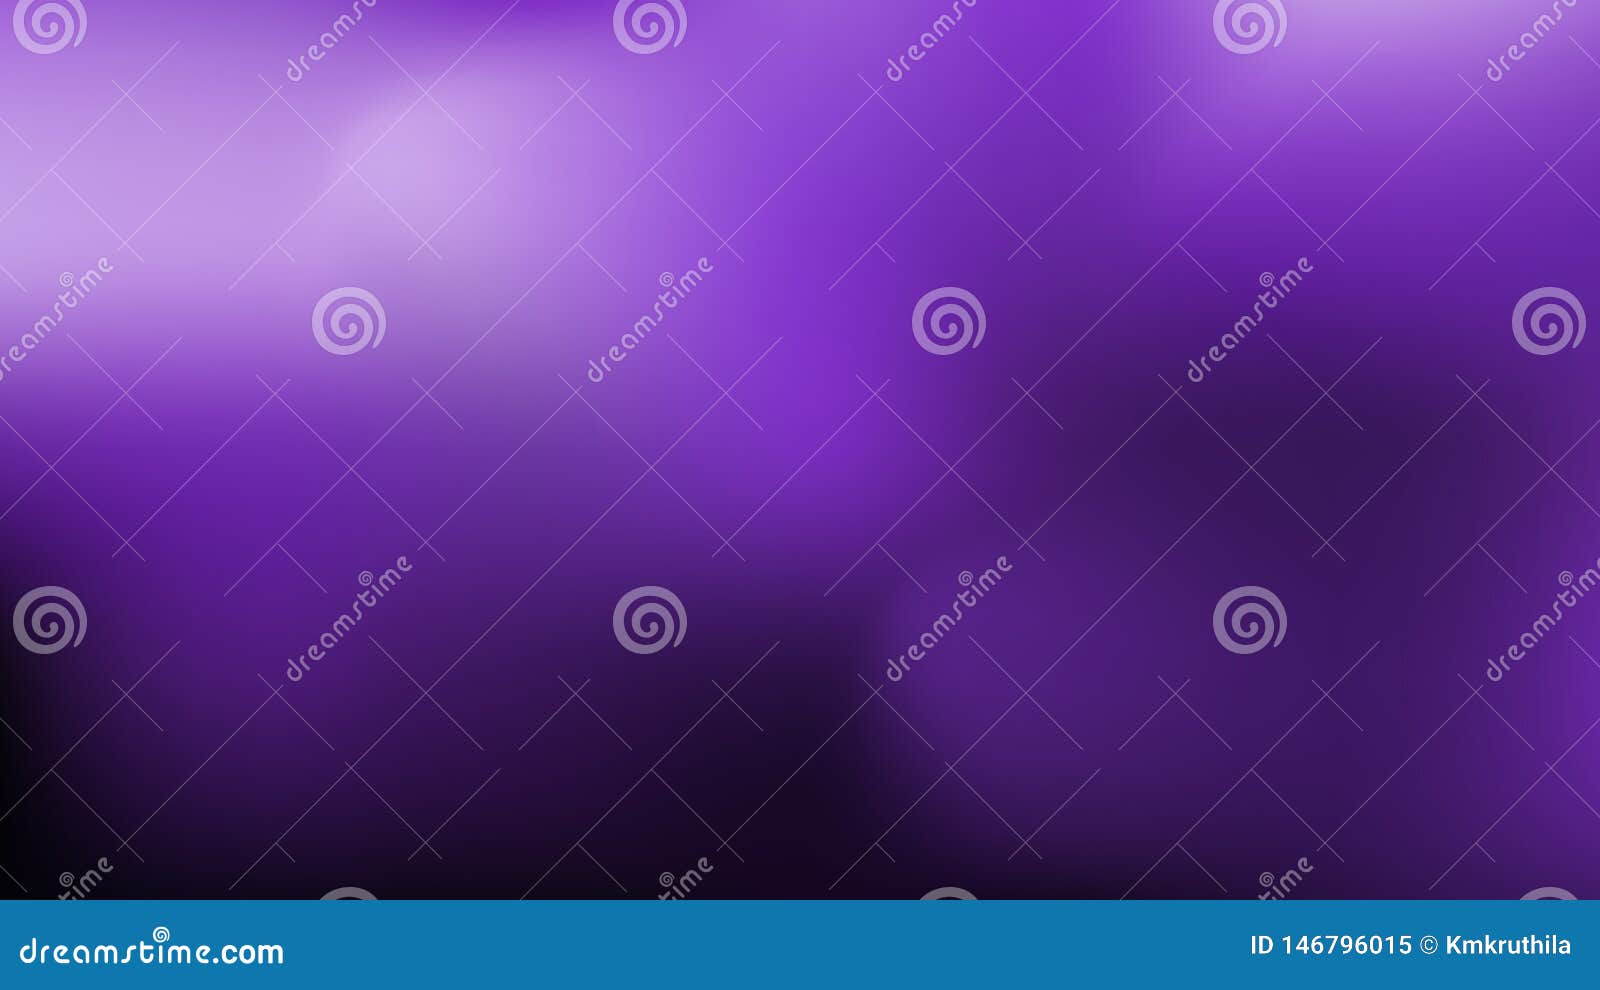 violet purple blue background beautiful elegant  graphic art  background